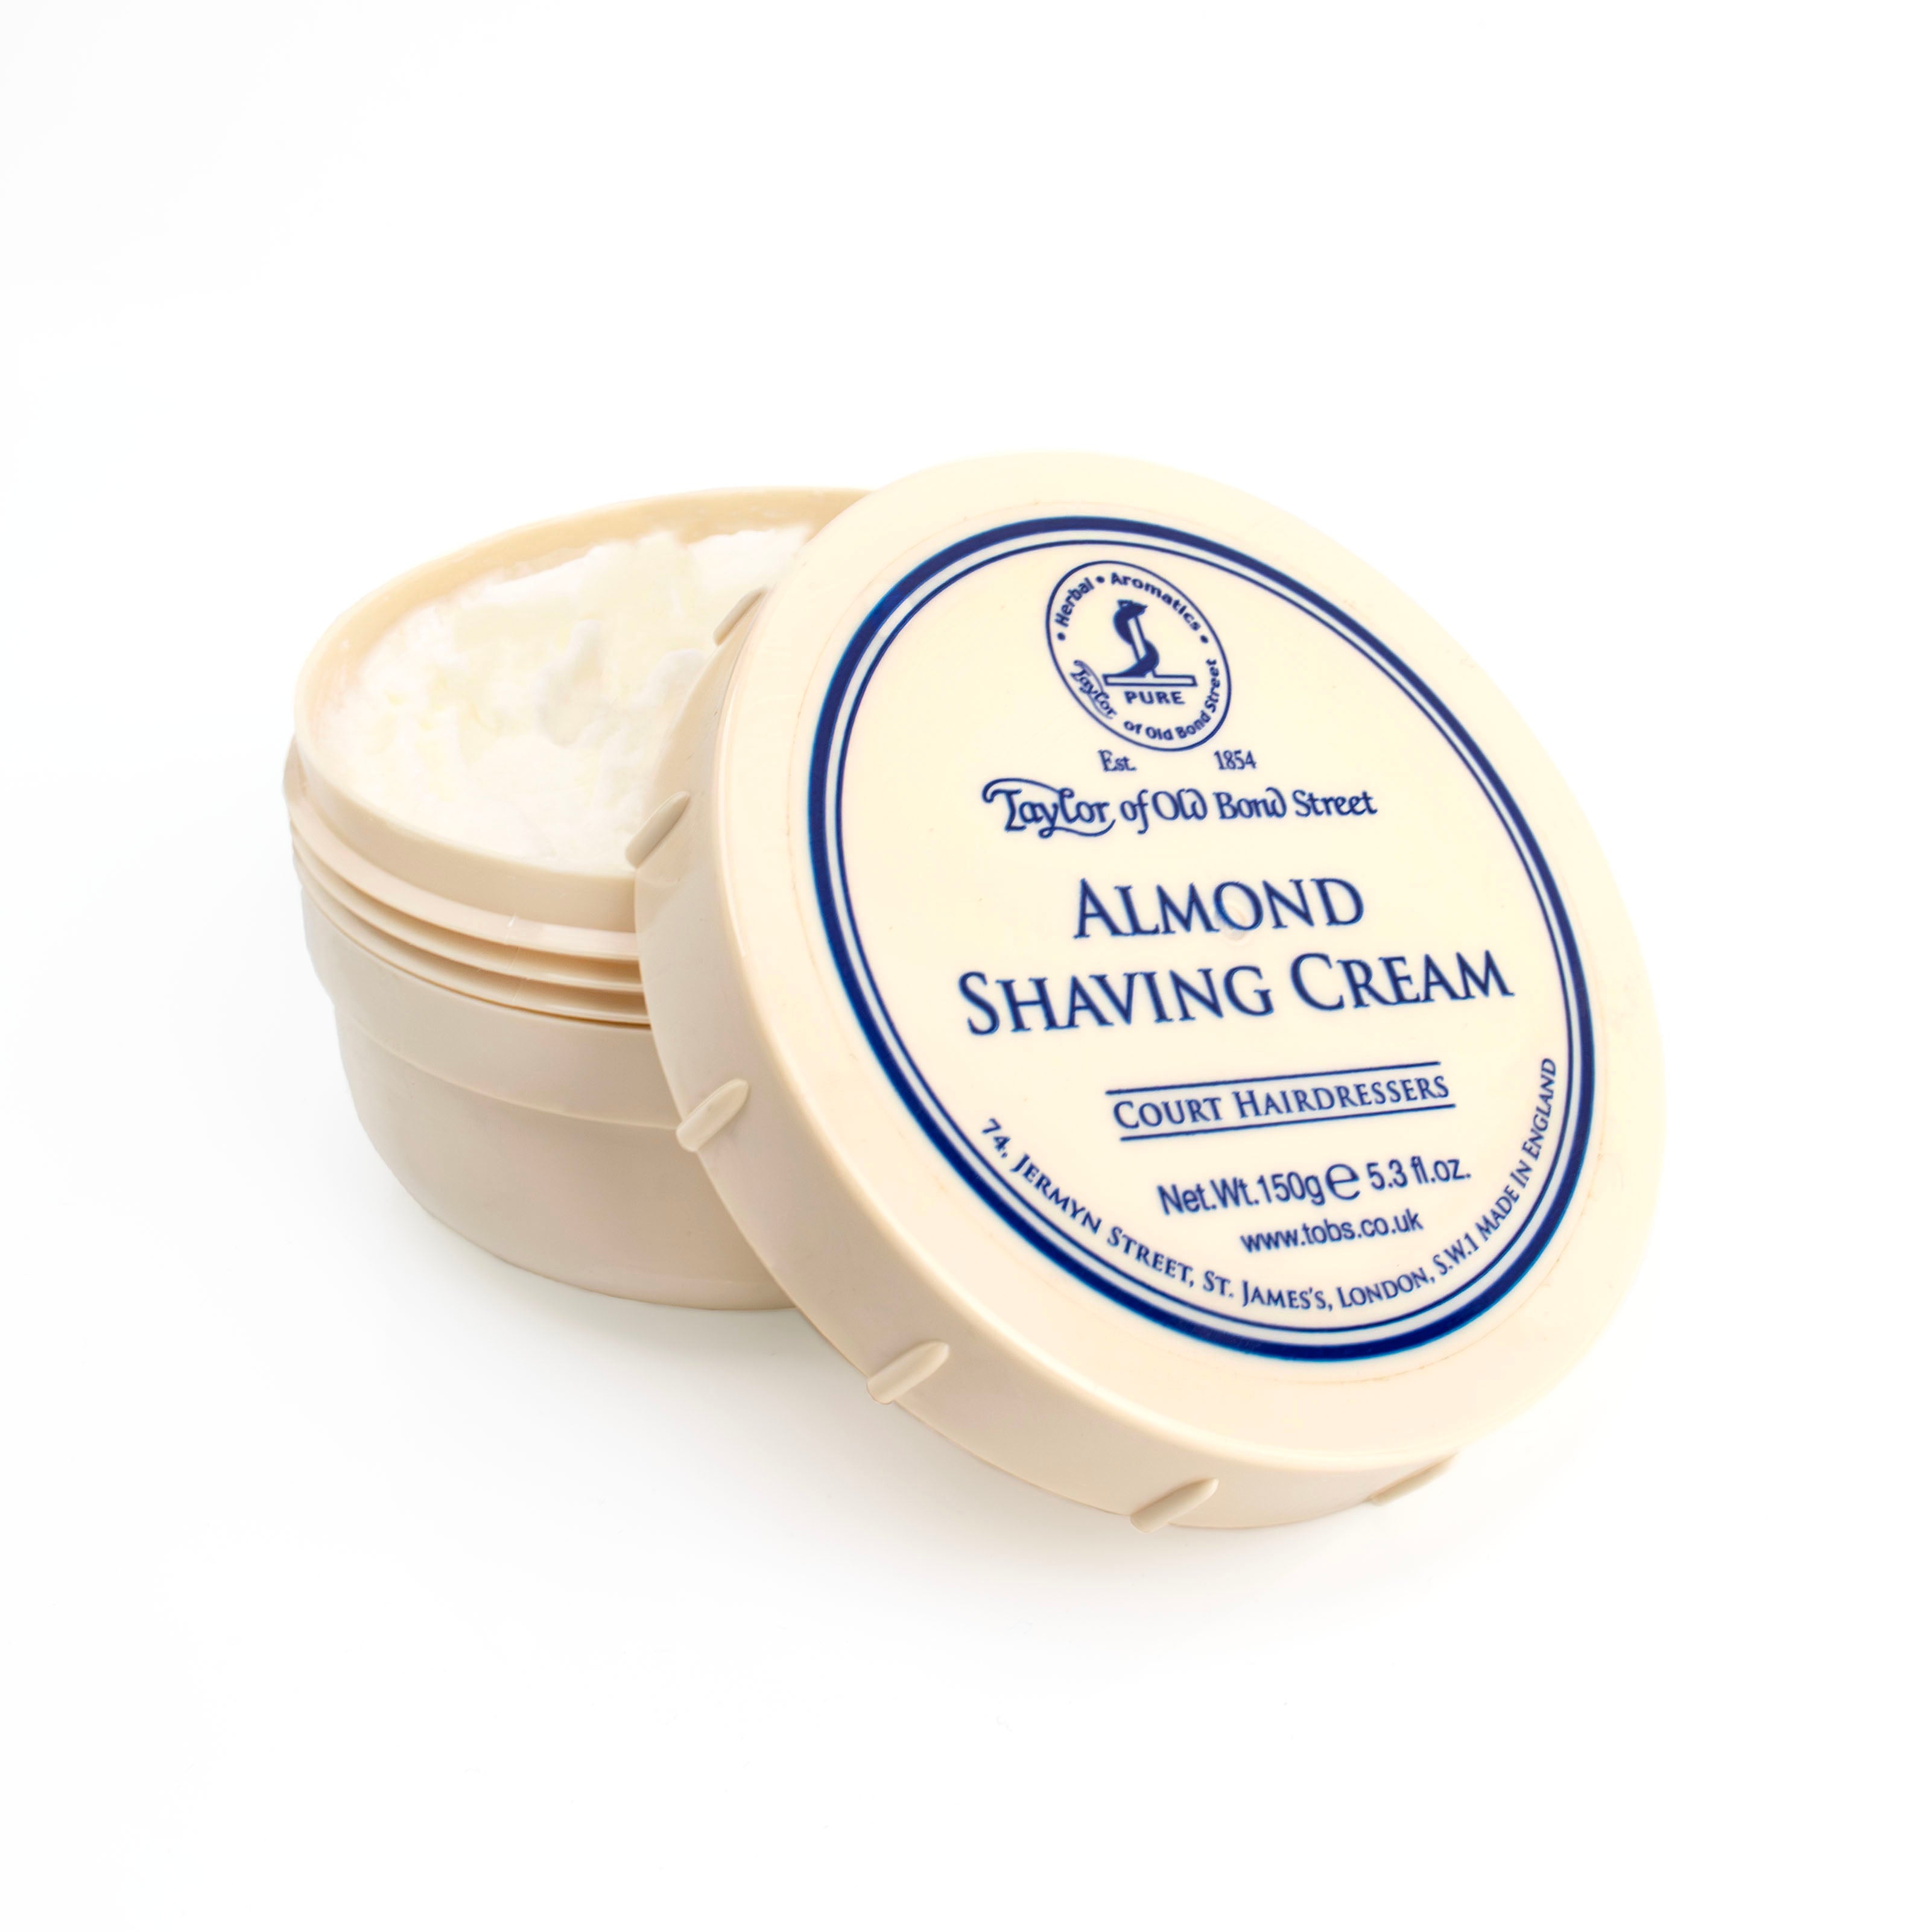 Taylor of Old Bond Street Sandalwood Shaving Cream Review 